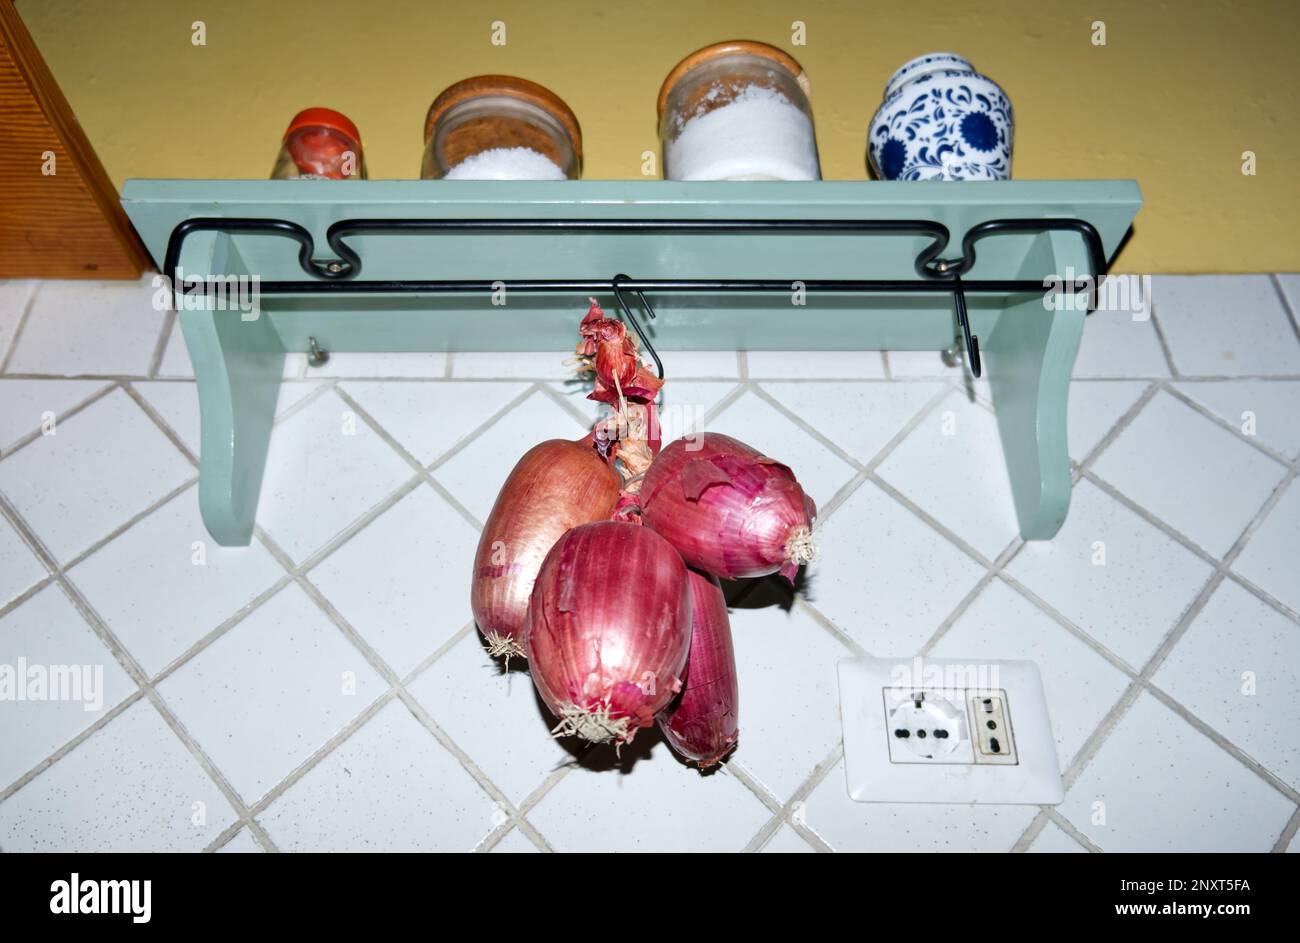 Cucina italiana: Una treccia di cipolline rosse dolci tropea appese in cucina Foto Stock